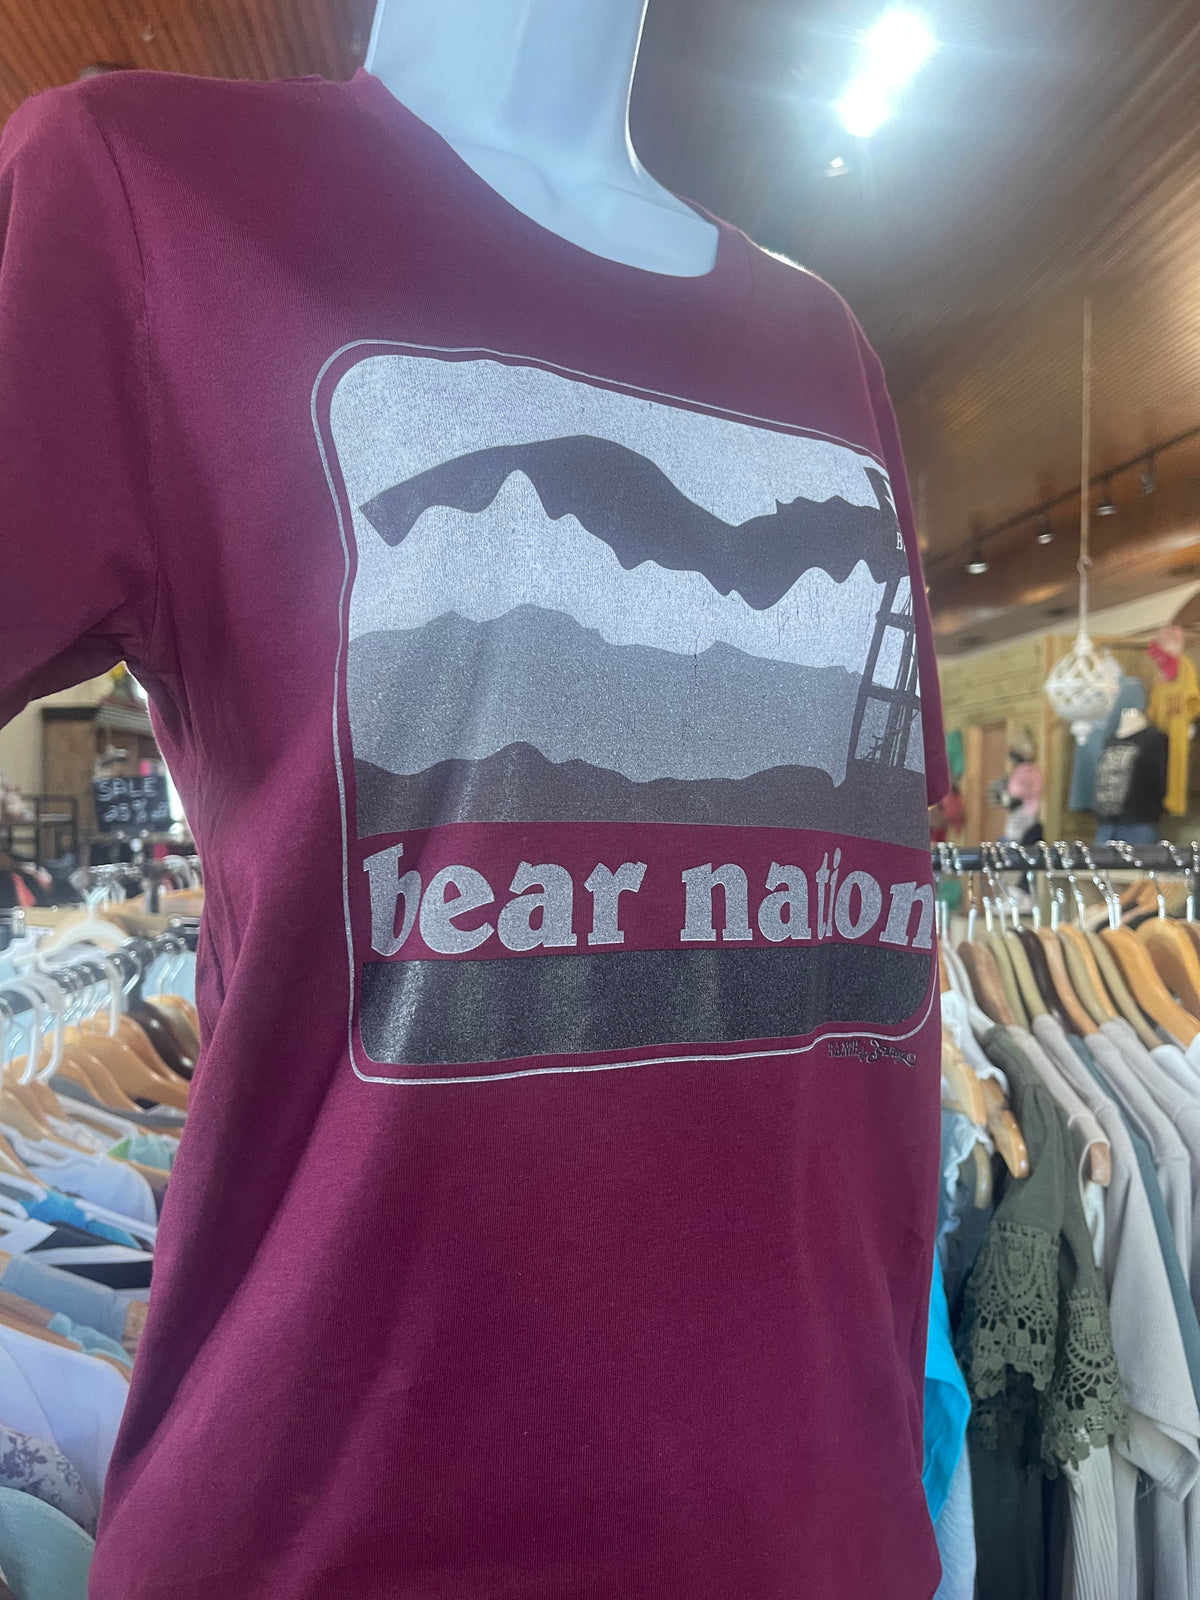 Bear Nation Tee